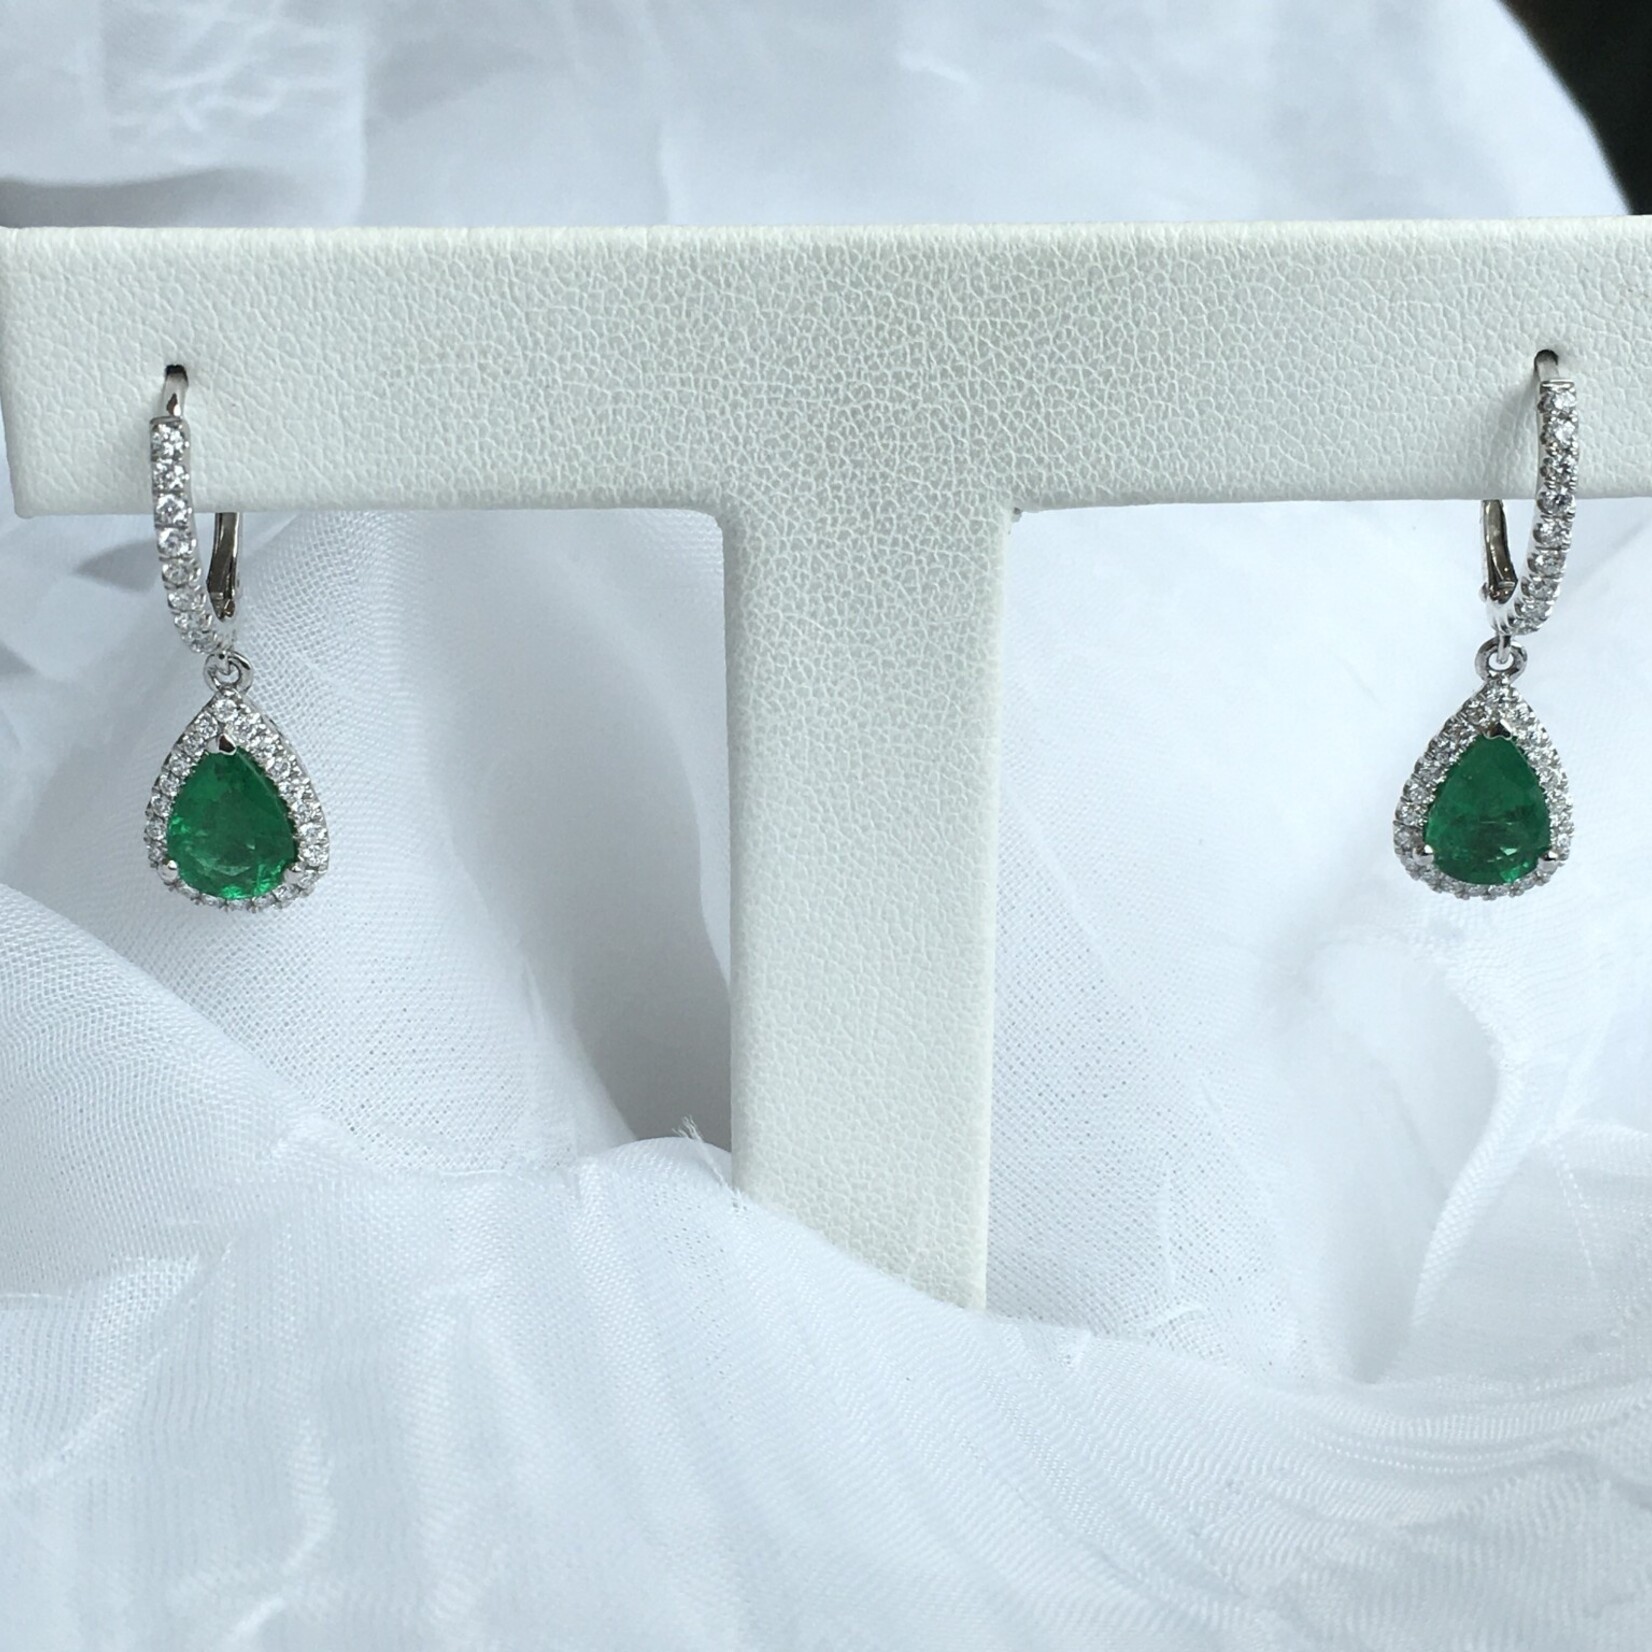 Jye International Inc 18ktW 1.88cttw, rd 0.5cctw Emerald and Diamond Earrings